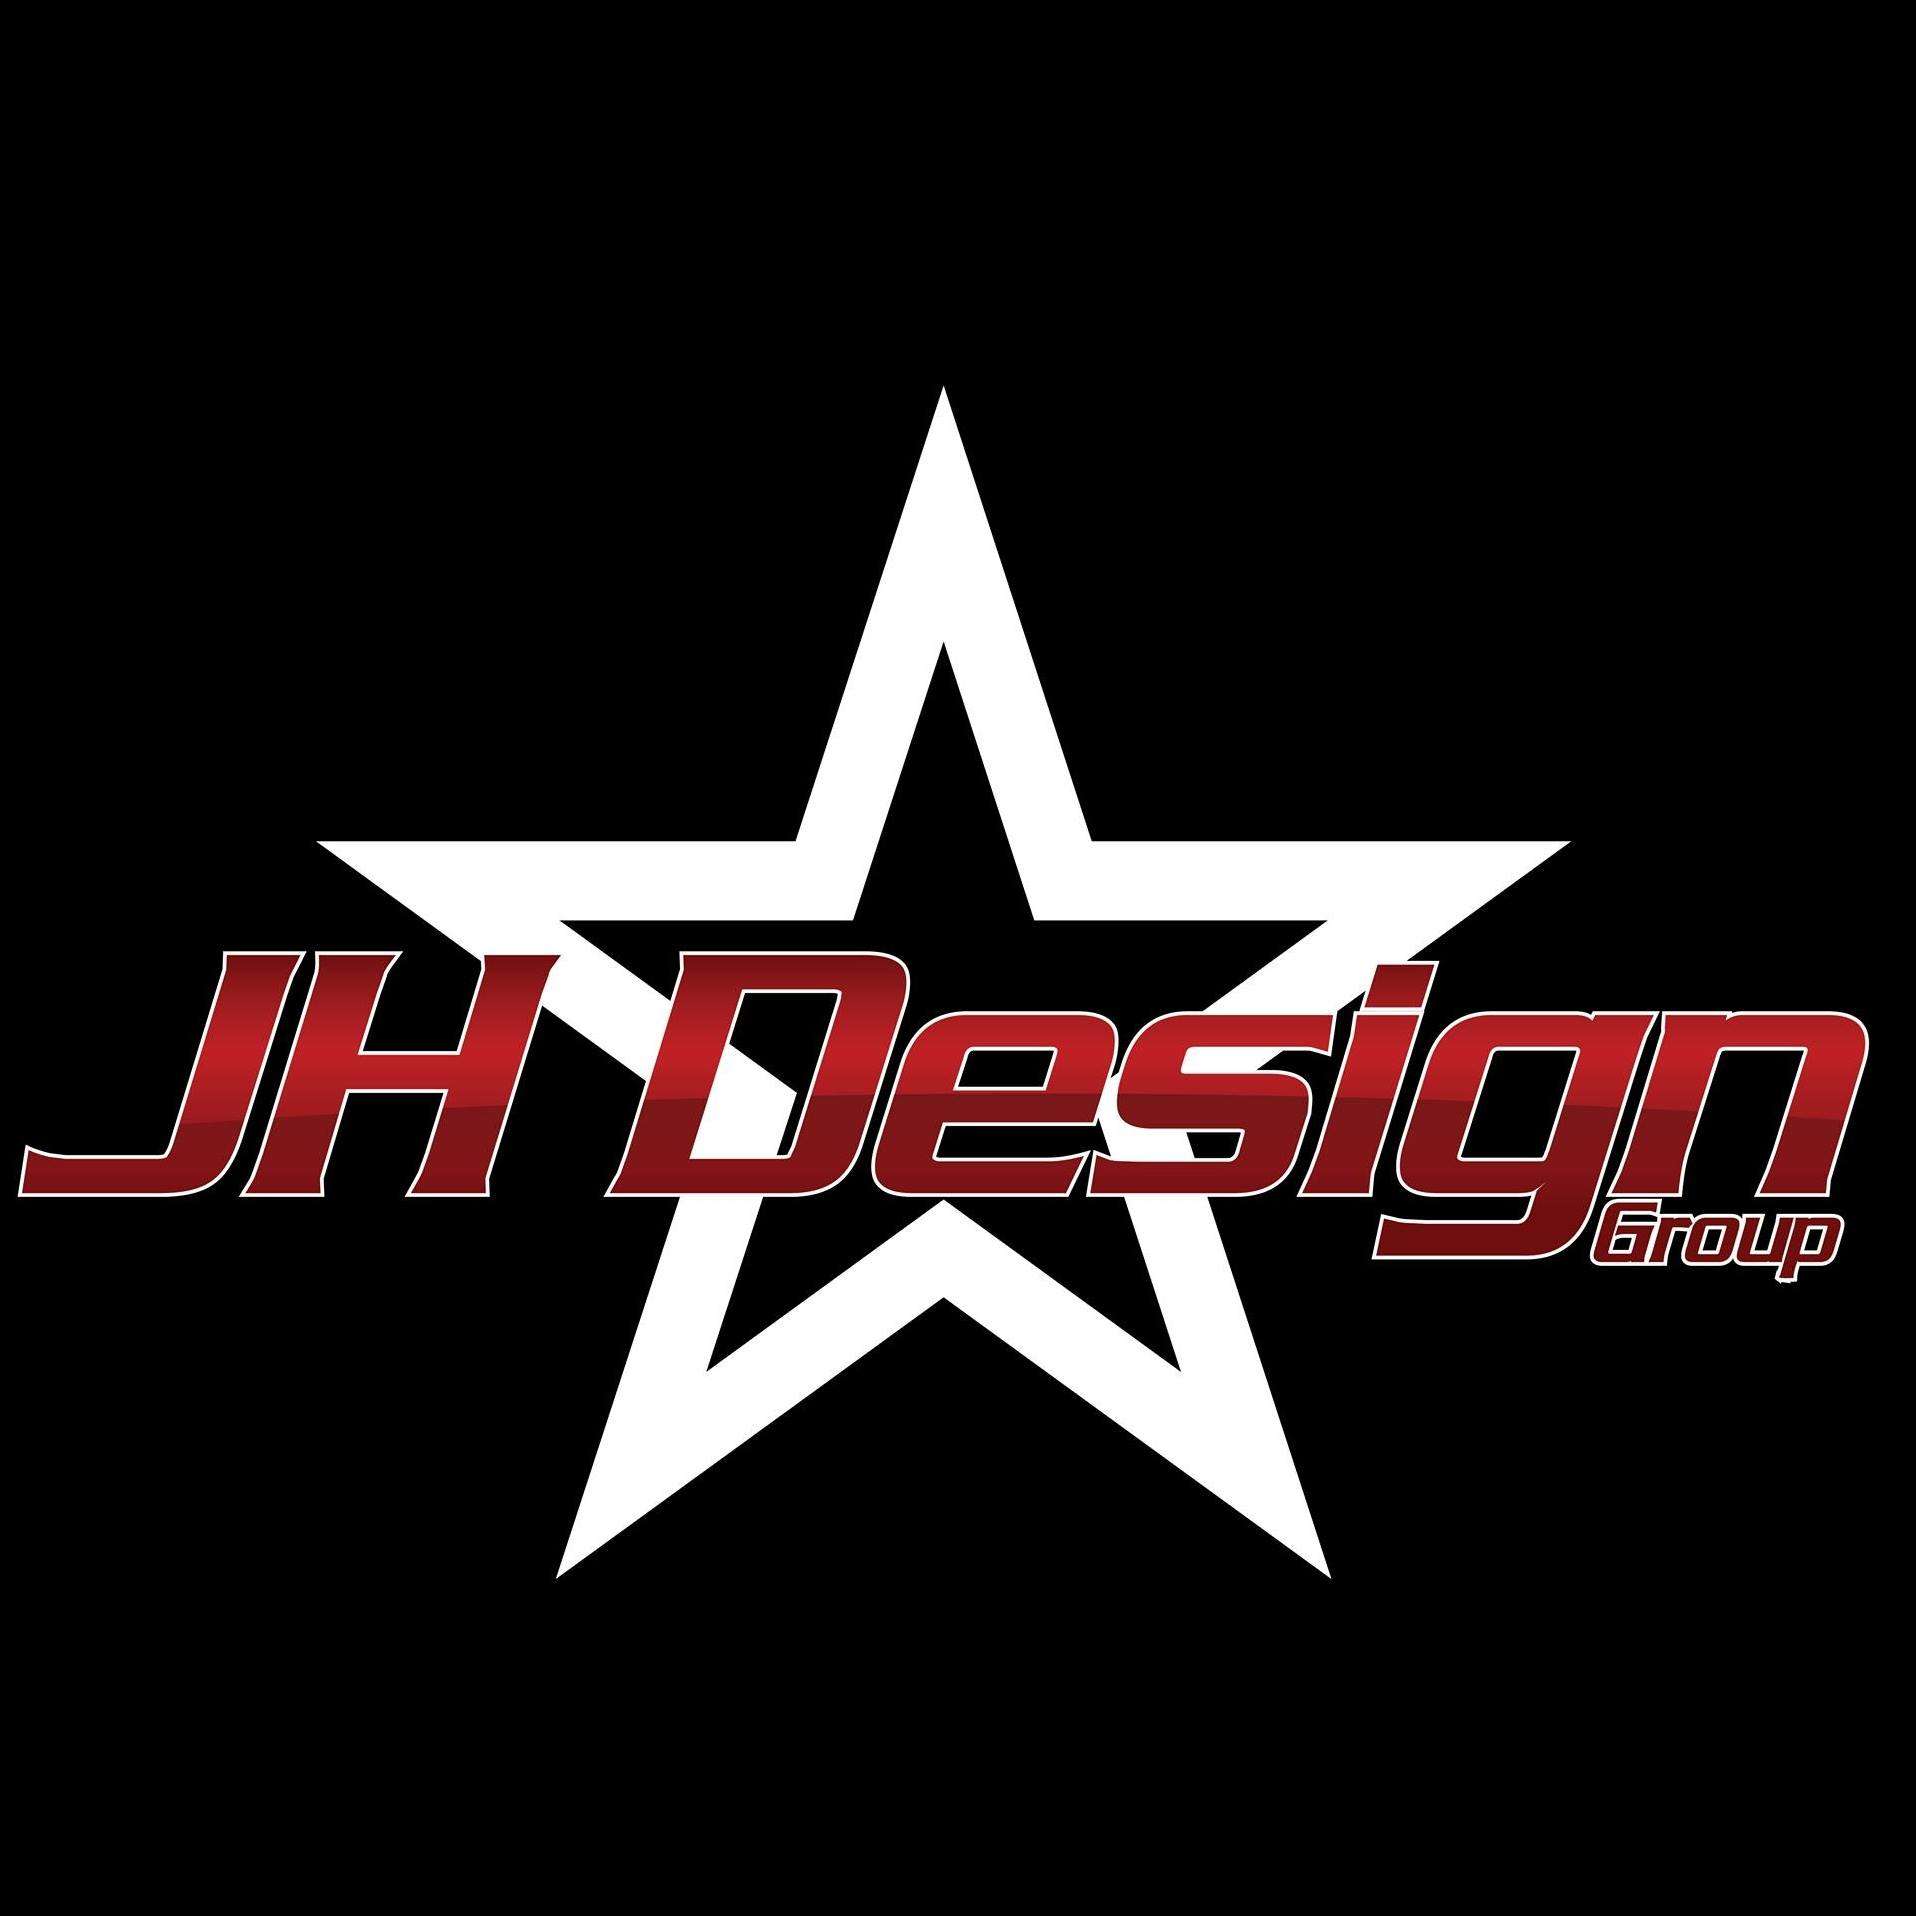 Jh Design - Crunchbase Company Profile & Funding